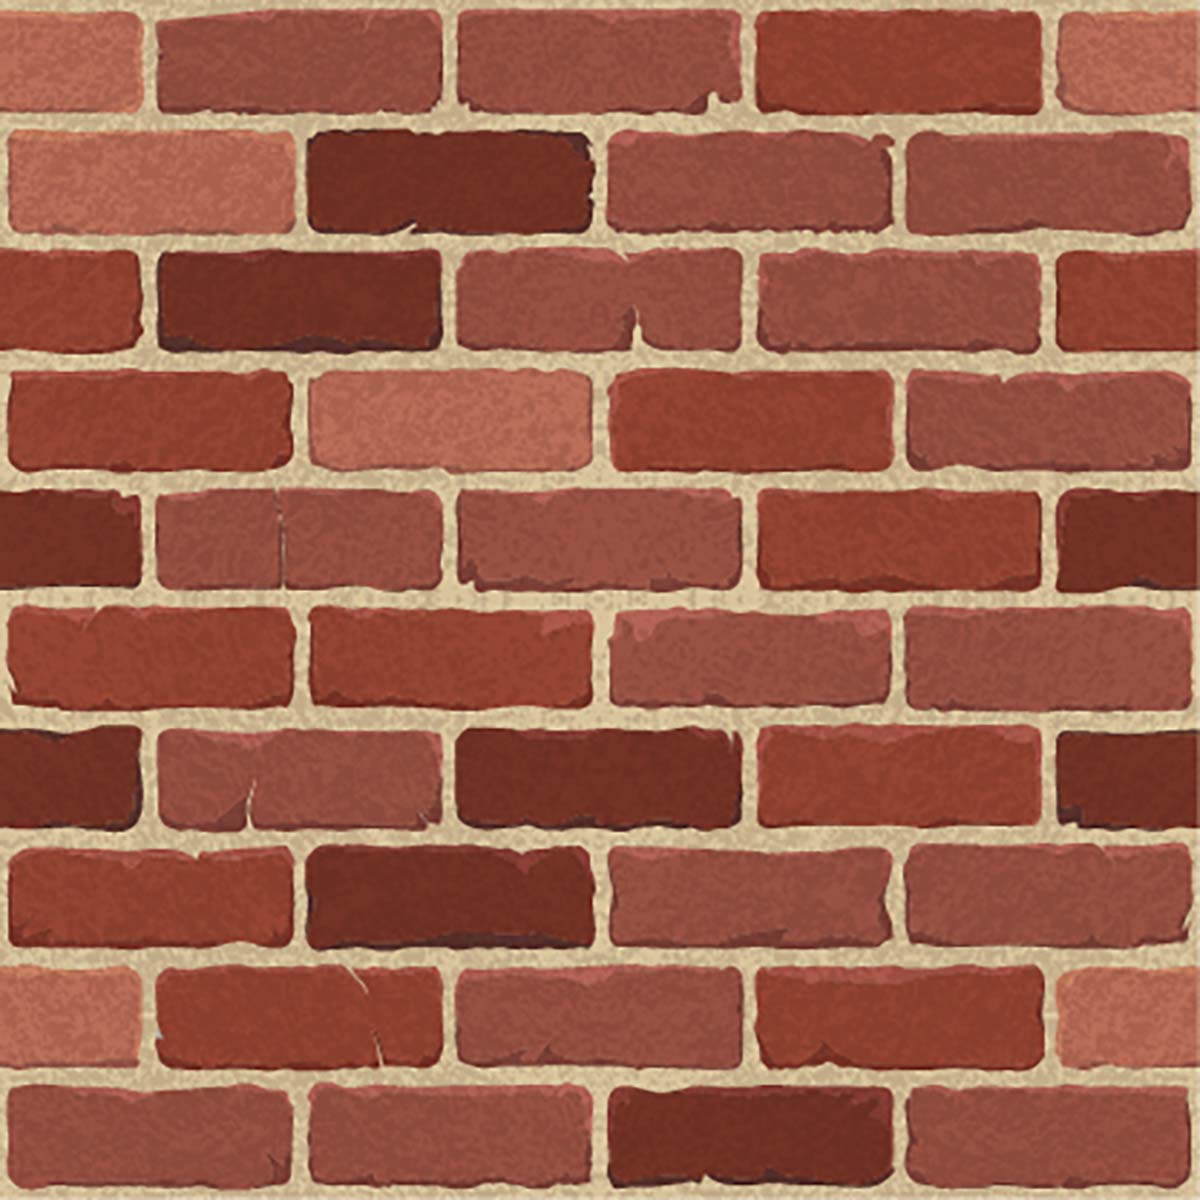 A brick wall with a tan border